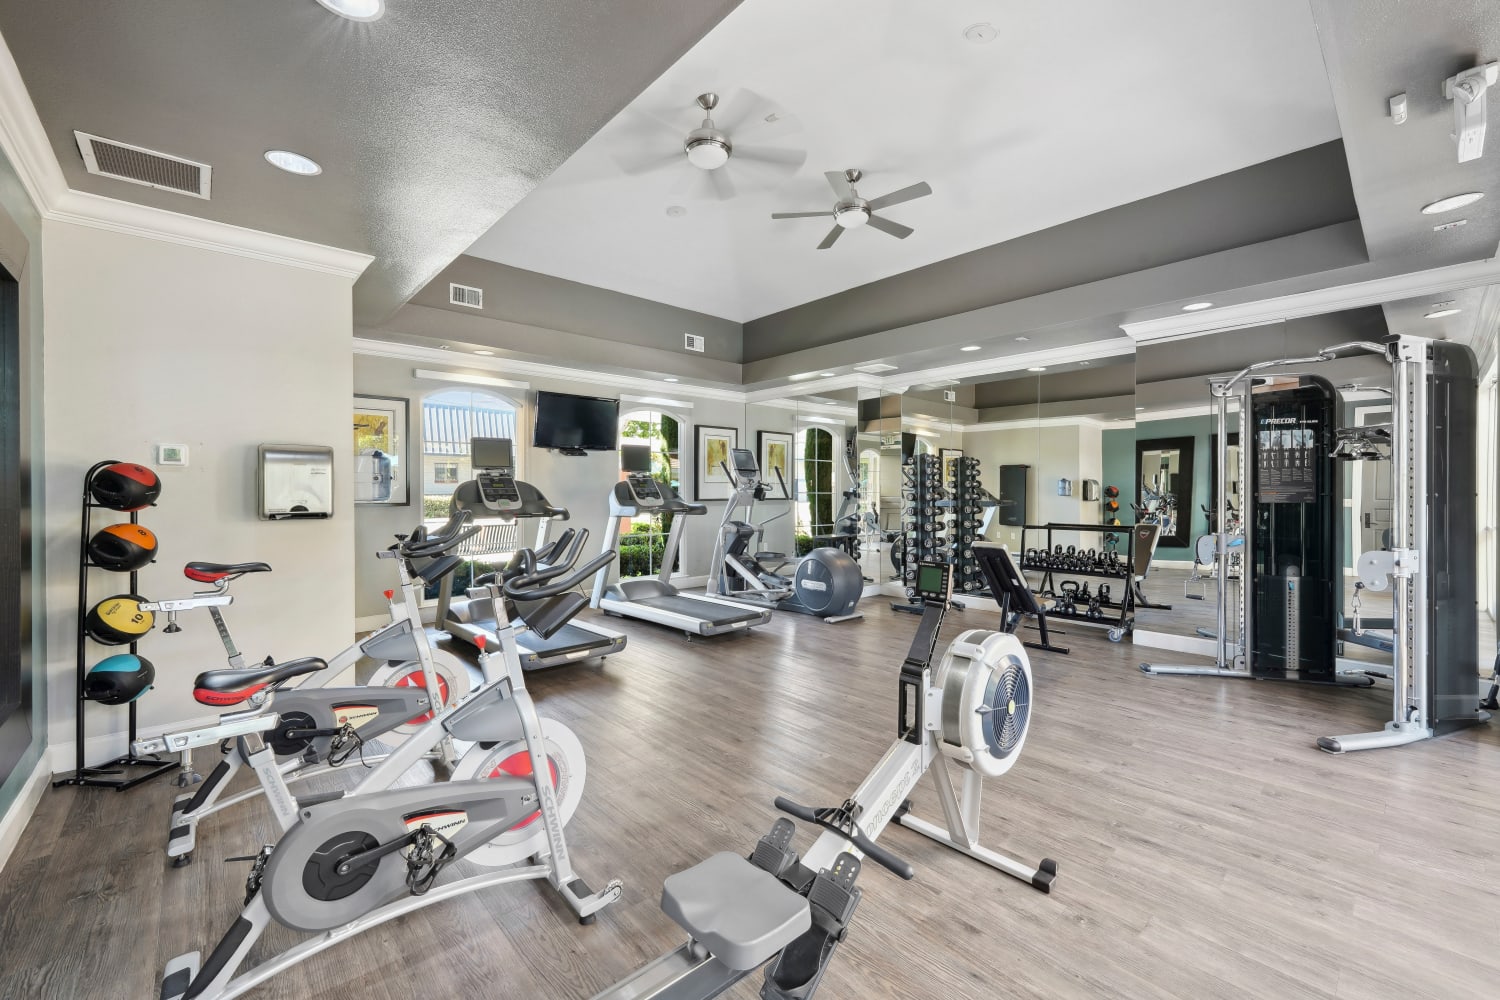 Work out room at Villa Del Sol in Sunnyvale, California